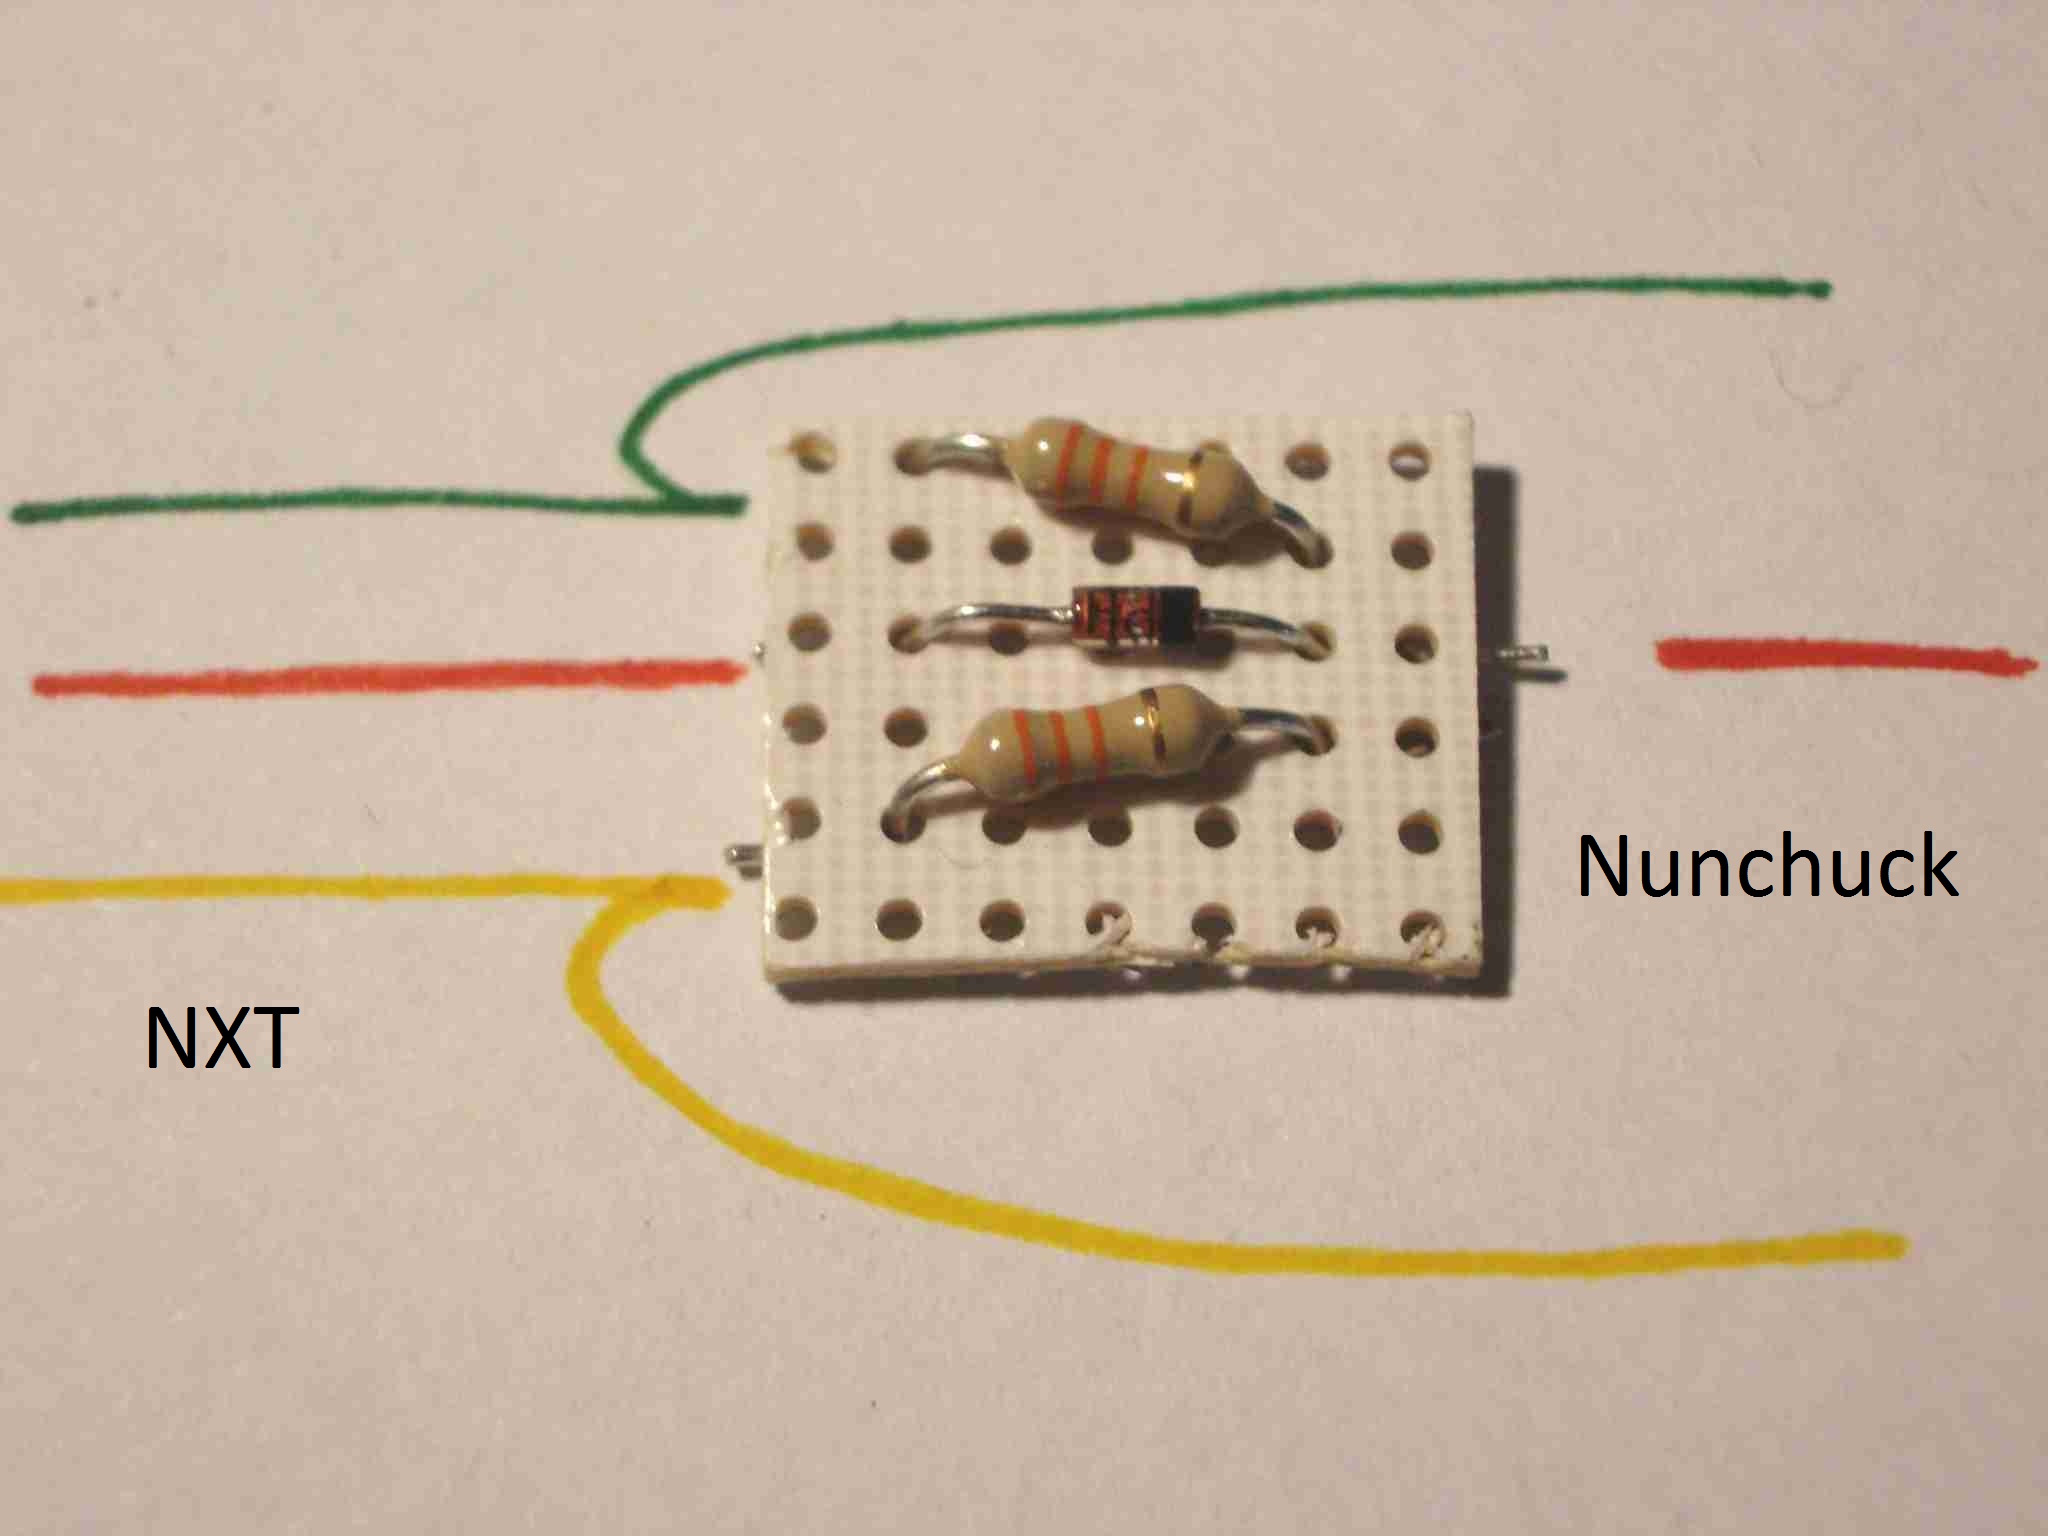 Conectar nunchuck a LEGO Mindstorms NXT 6